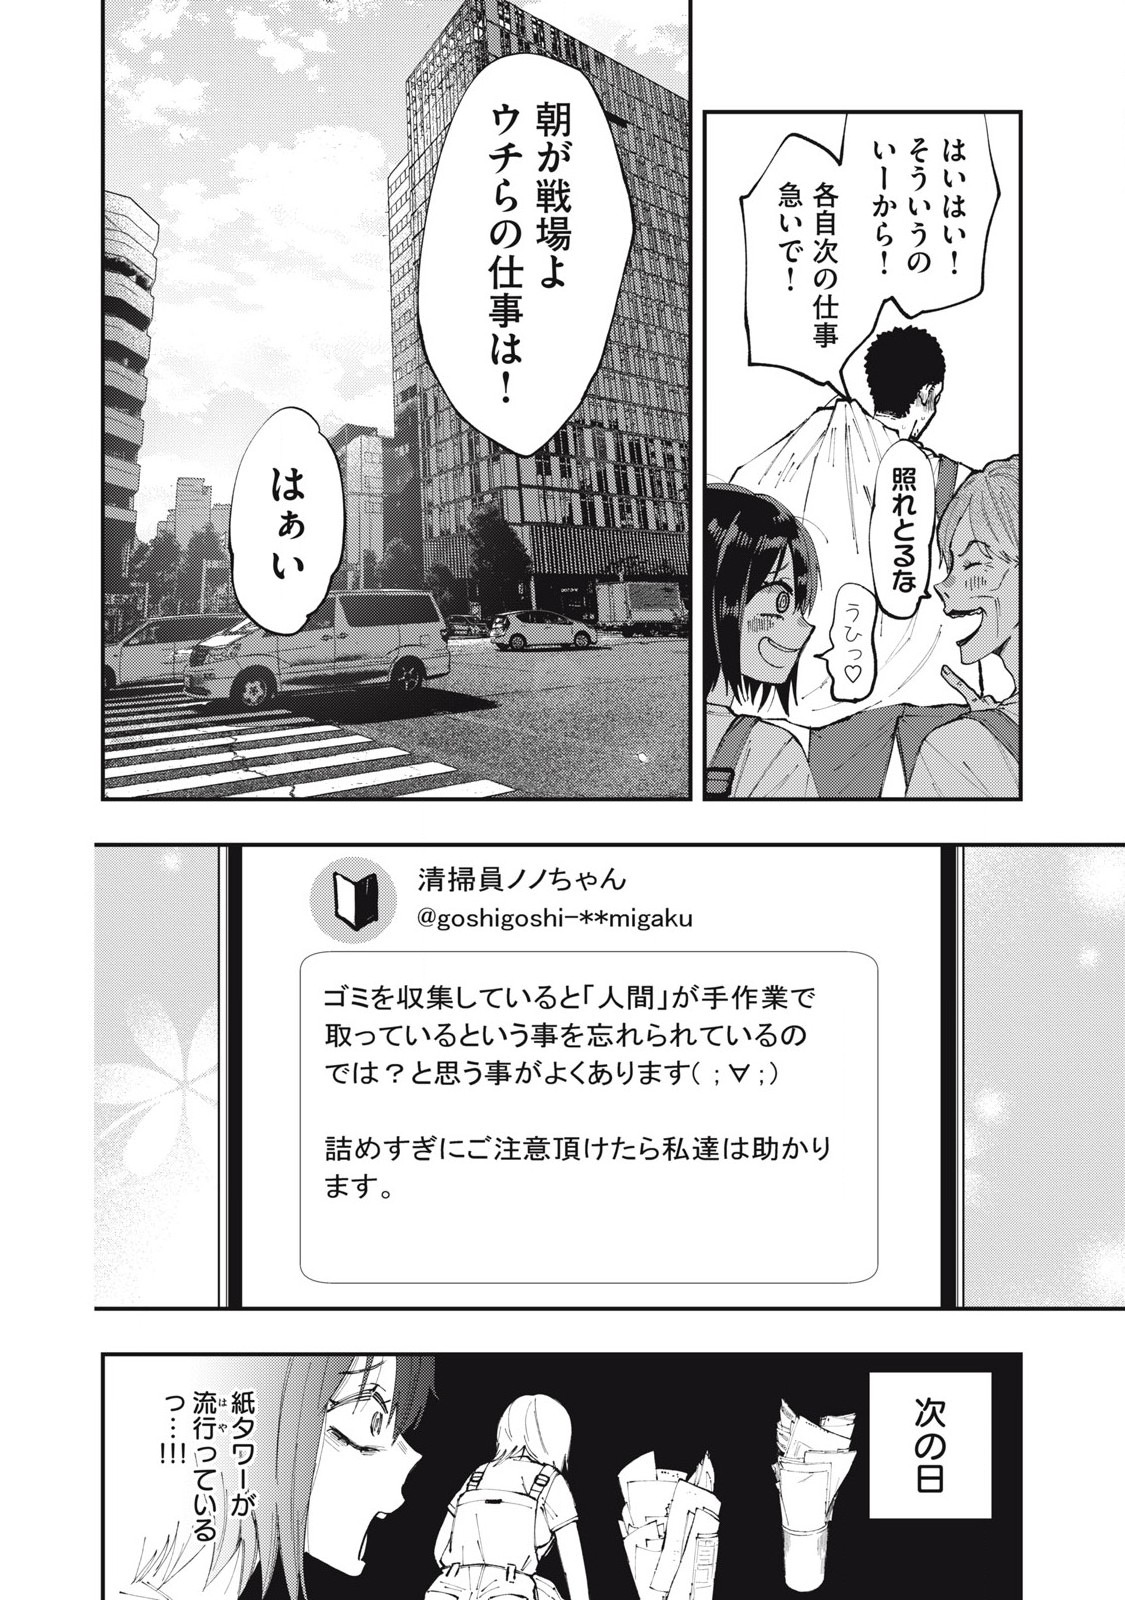 Seisouin Nono-chan Kyou no Tsubuyaki - Chapter 2 - Page 10